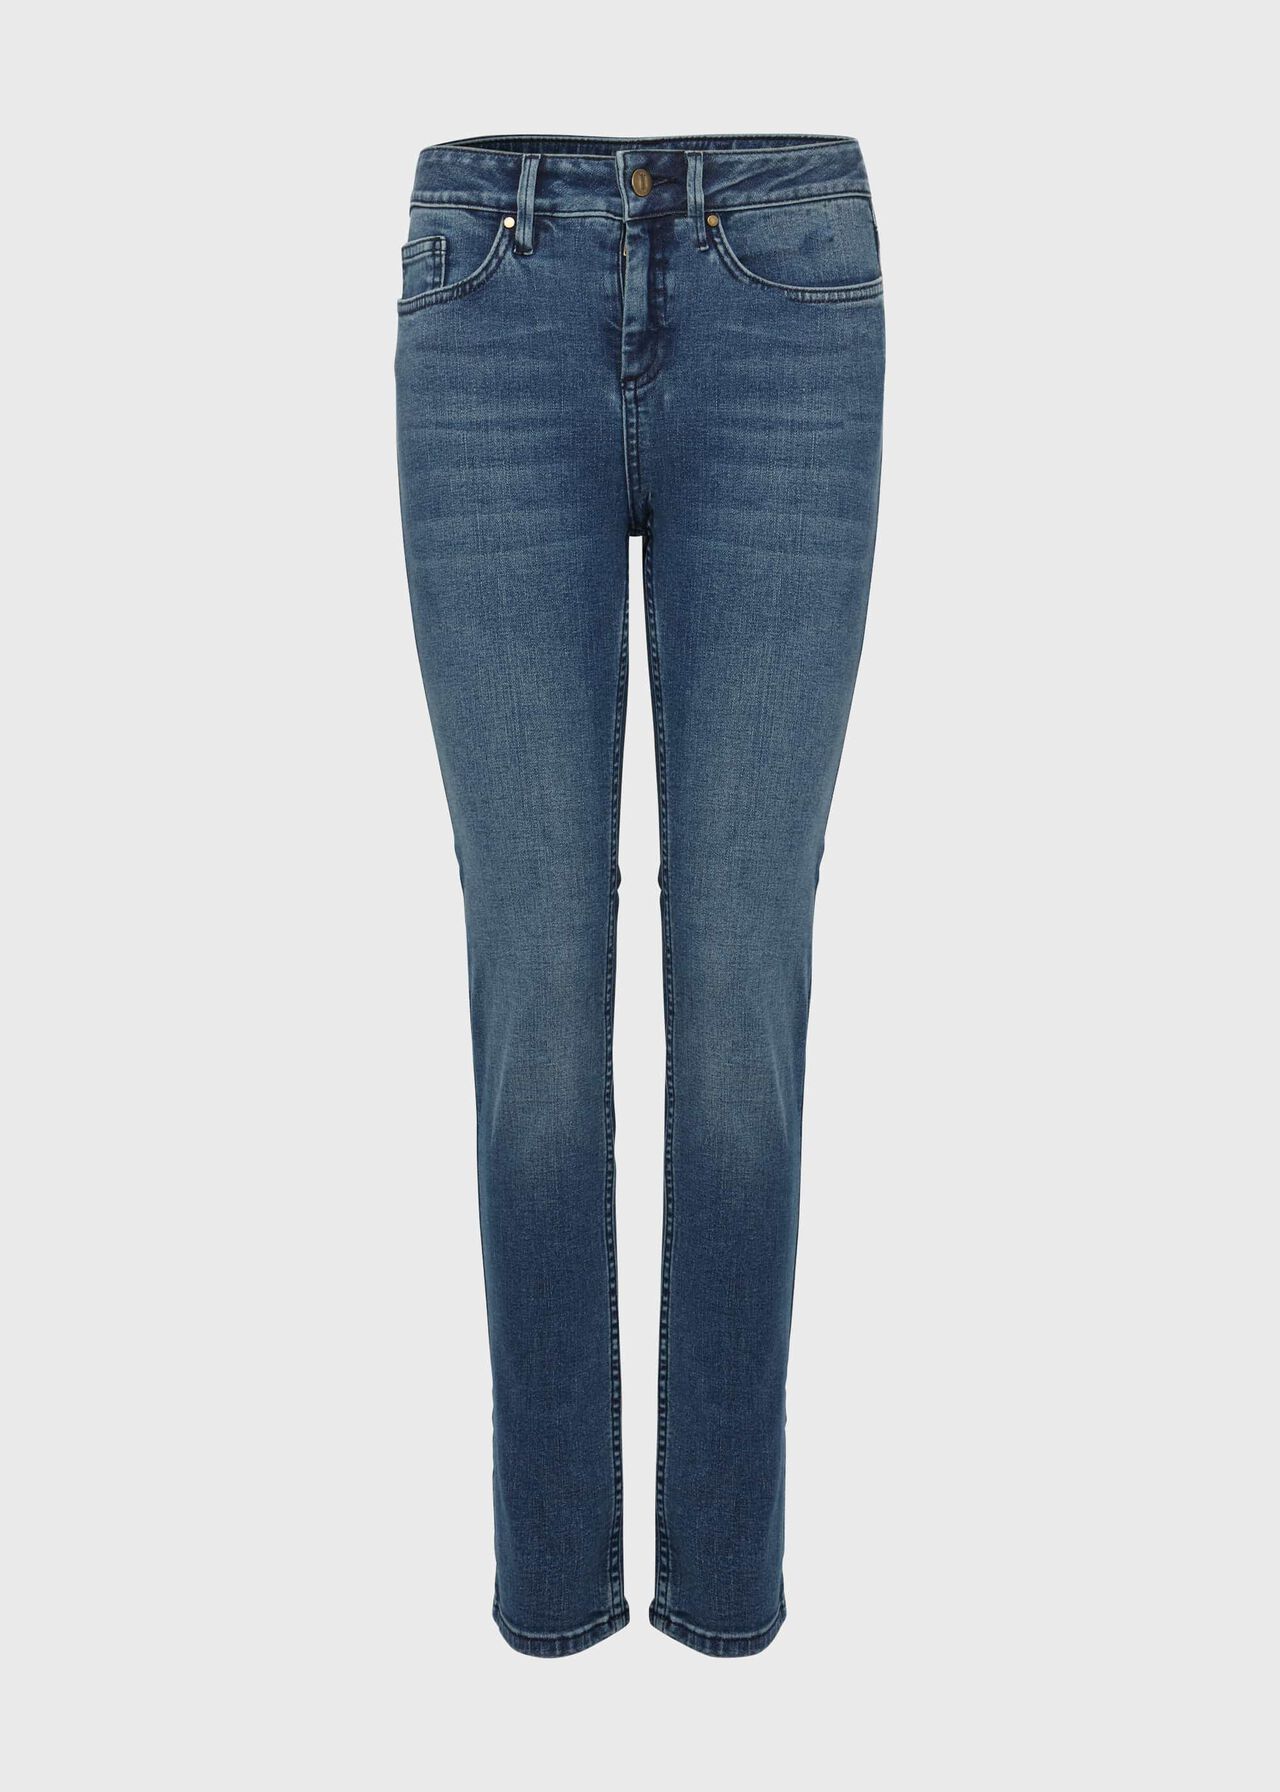 Sukey Slim Jeans, Mid Wash, hi-res